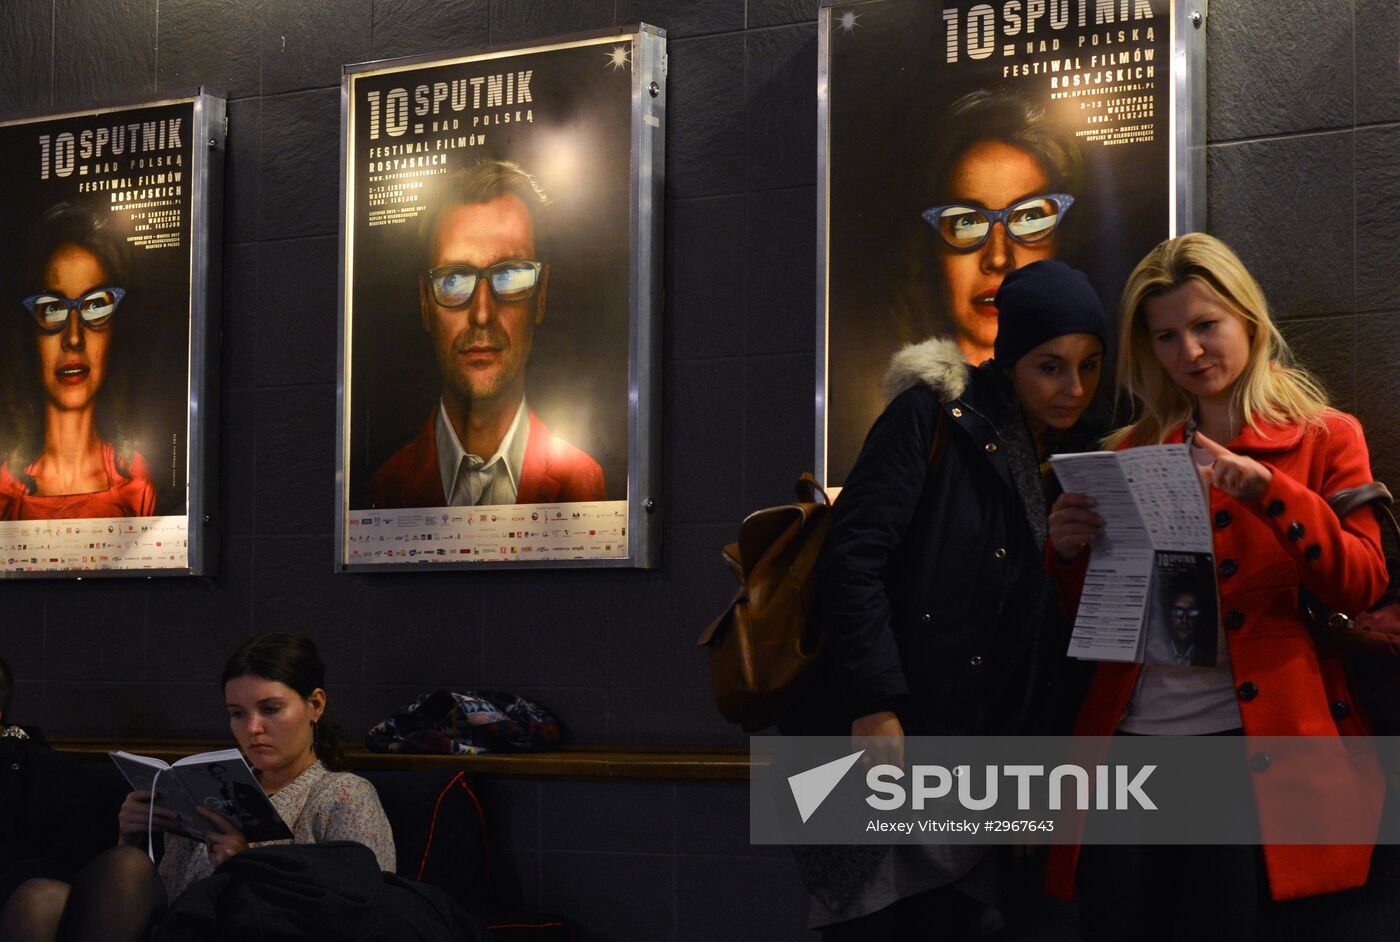 Satellite over Poland festival of Russian films